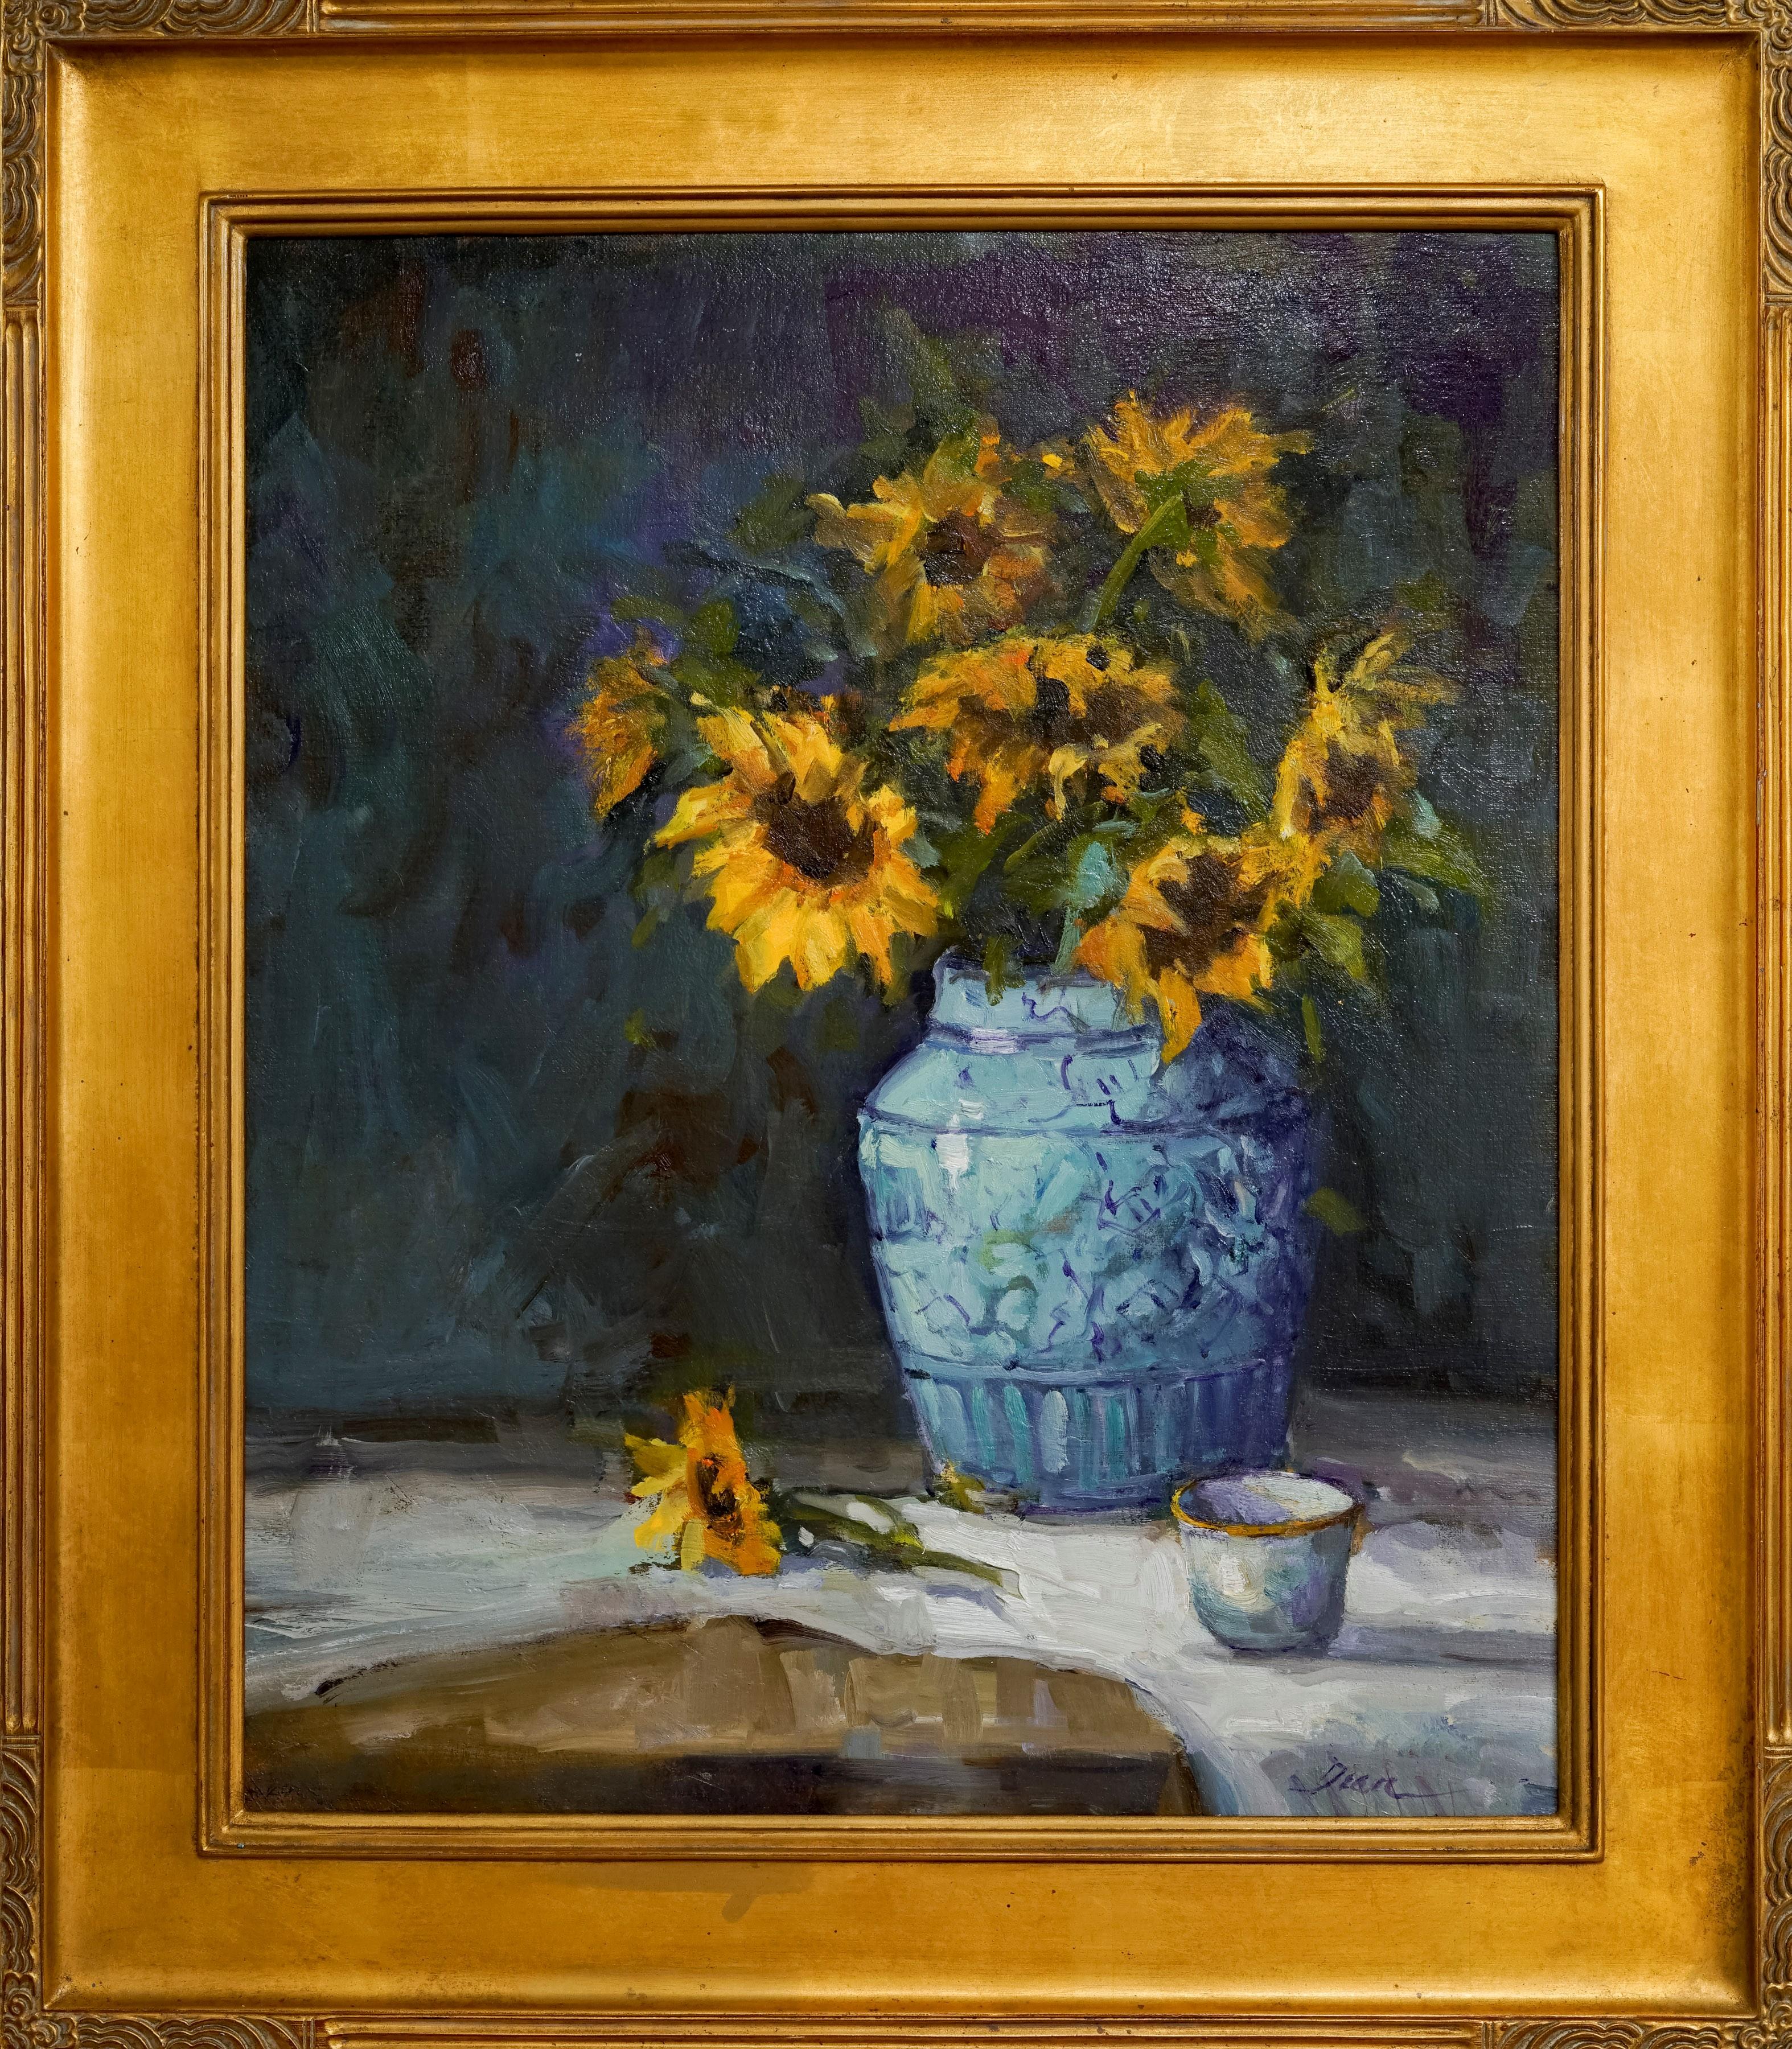 Unknown Still-Life Painting - Sunflower Day, Plein Air Original Fine Art Gold Frame Oil on Linen Canvas